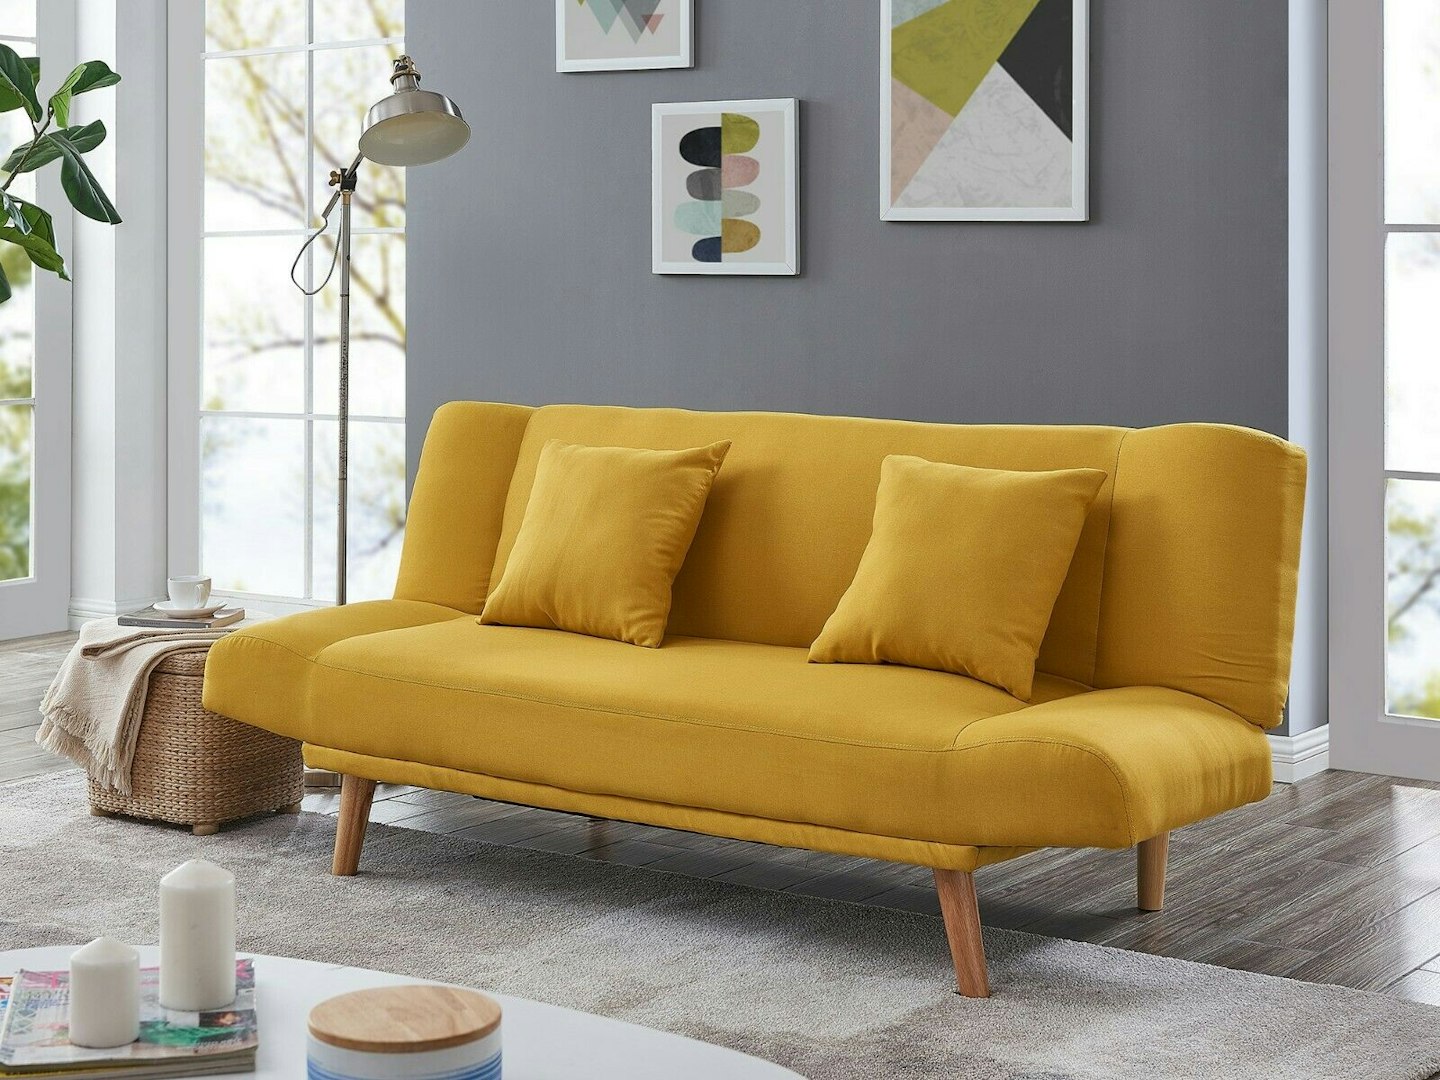 Three Seater Mustard Sofa Bed, £249.99